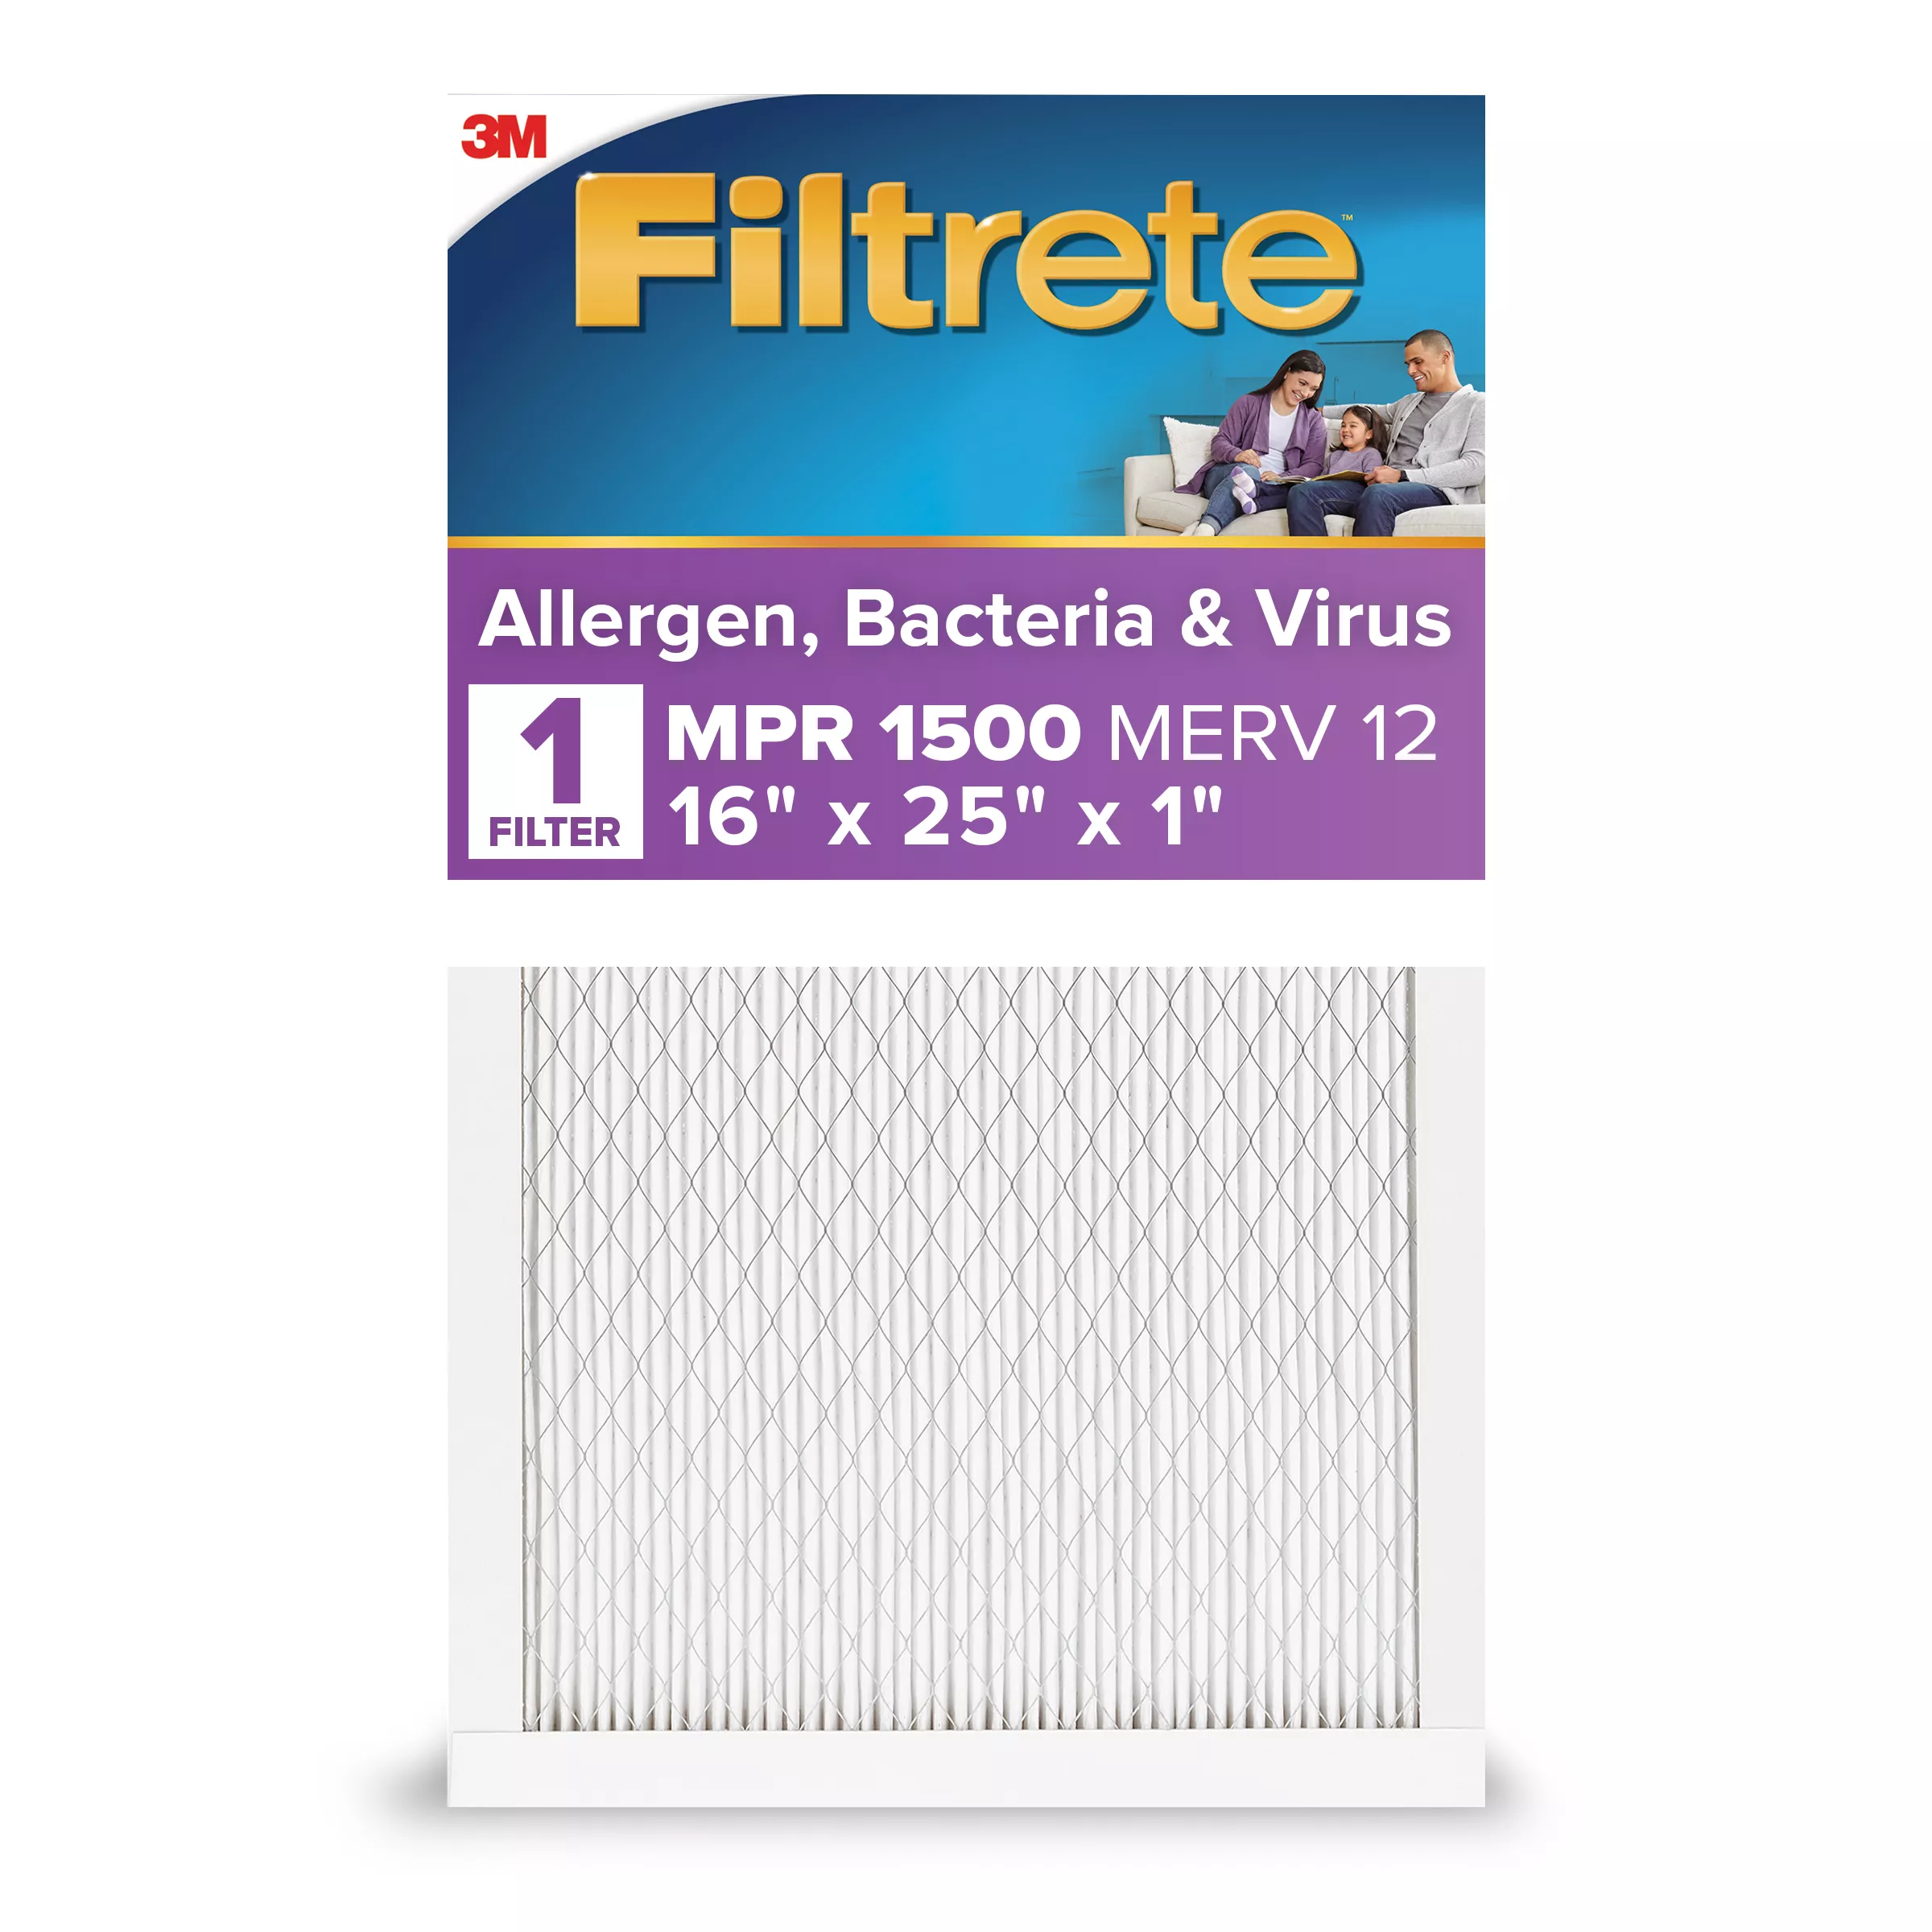 Filtrete™ Allergen, Bacteria & Virus Air Filter, 1500 MPR, 2001-4-HR, 16
in x 25 in x 1 in (40,6 cm x 63,5 cm x 2,5 cm)